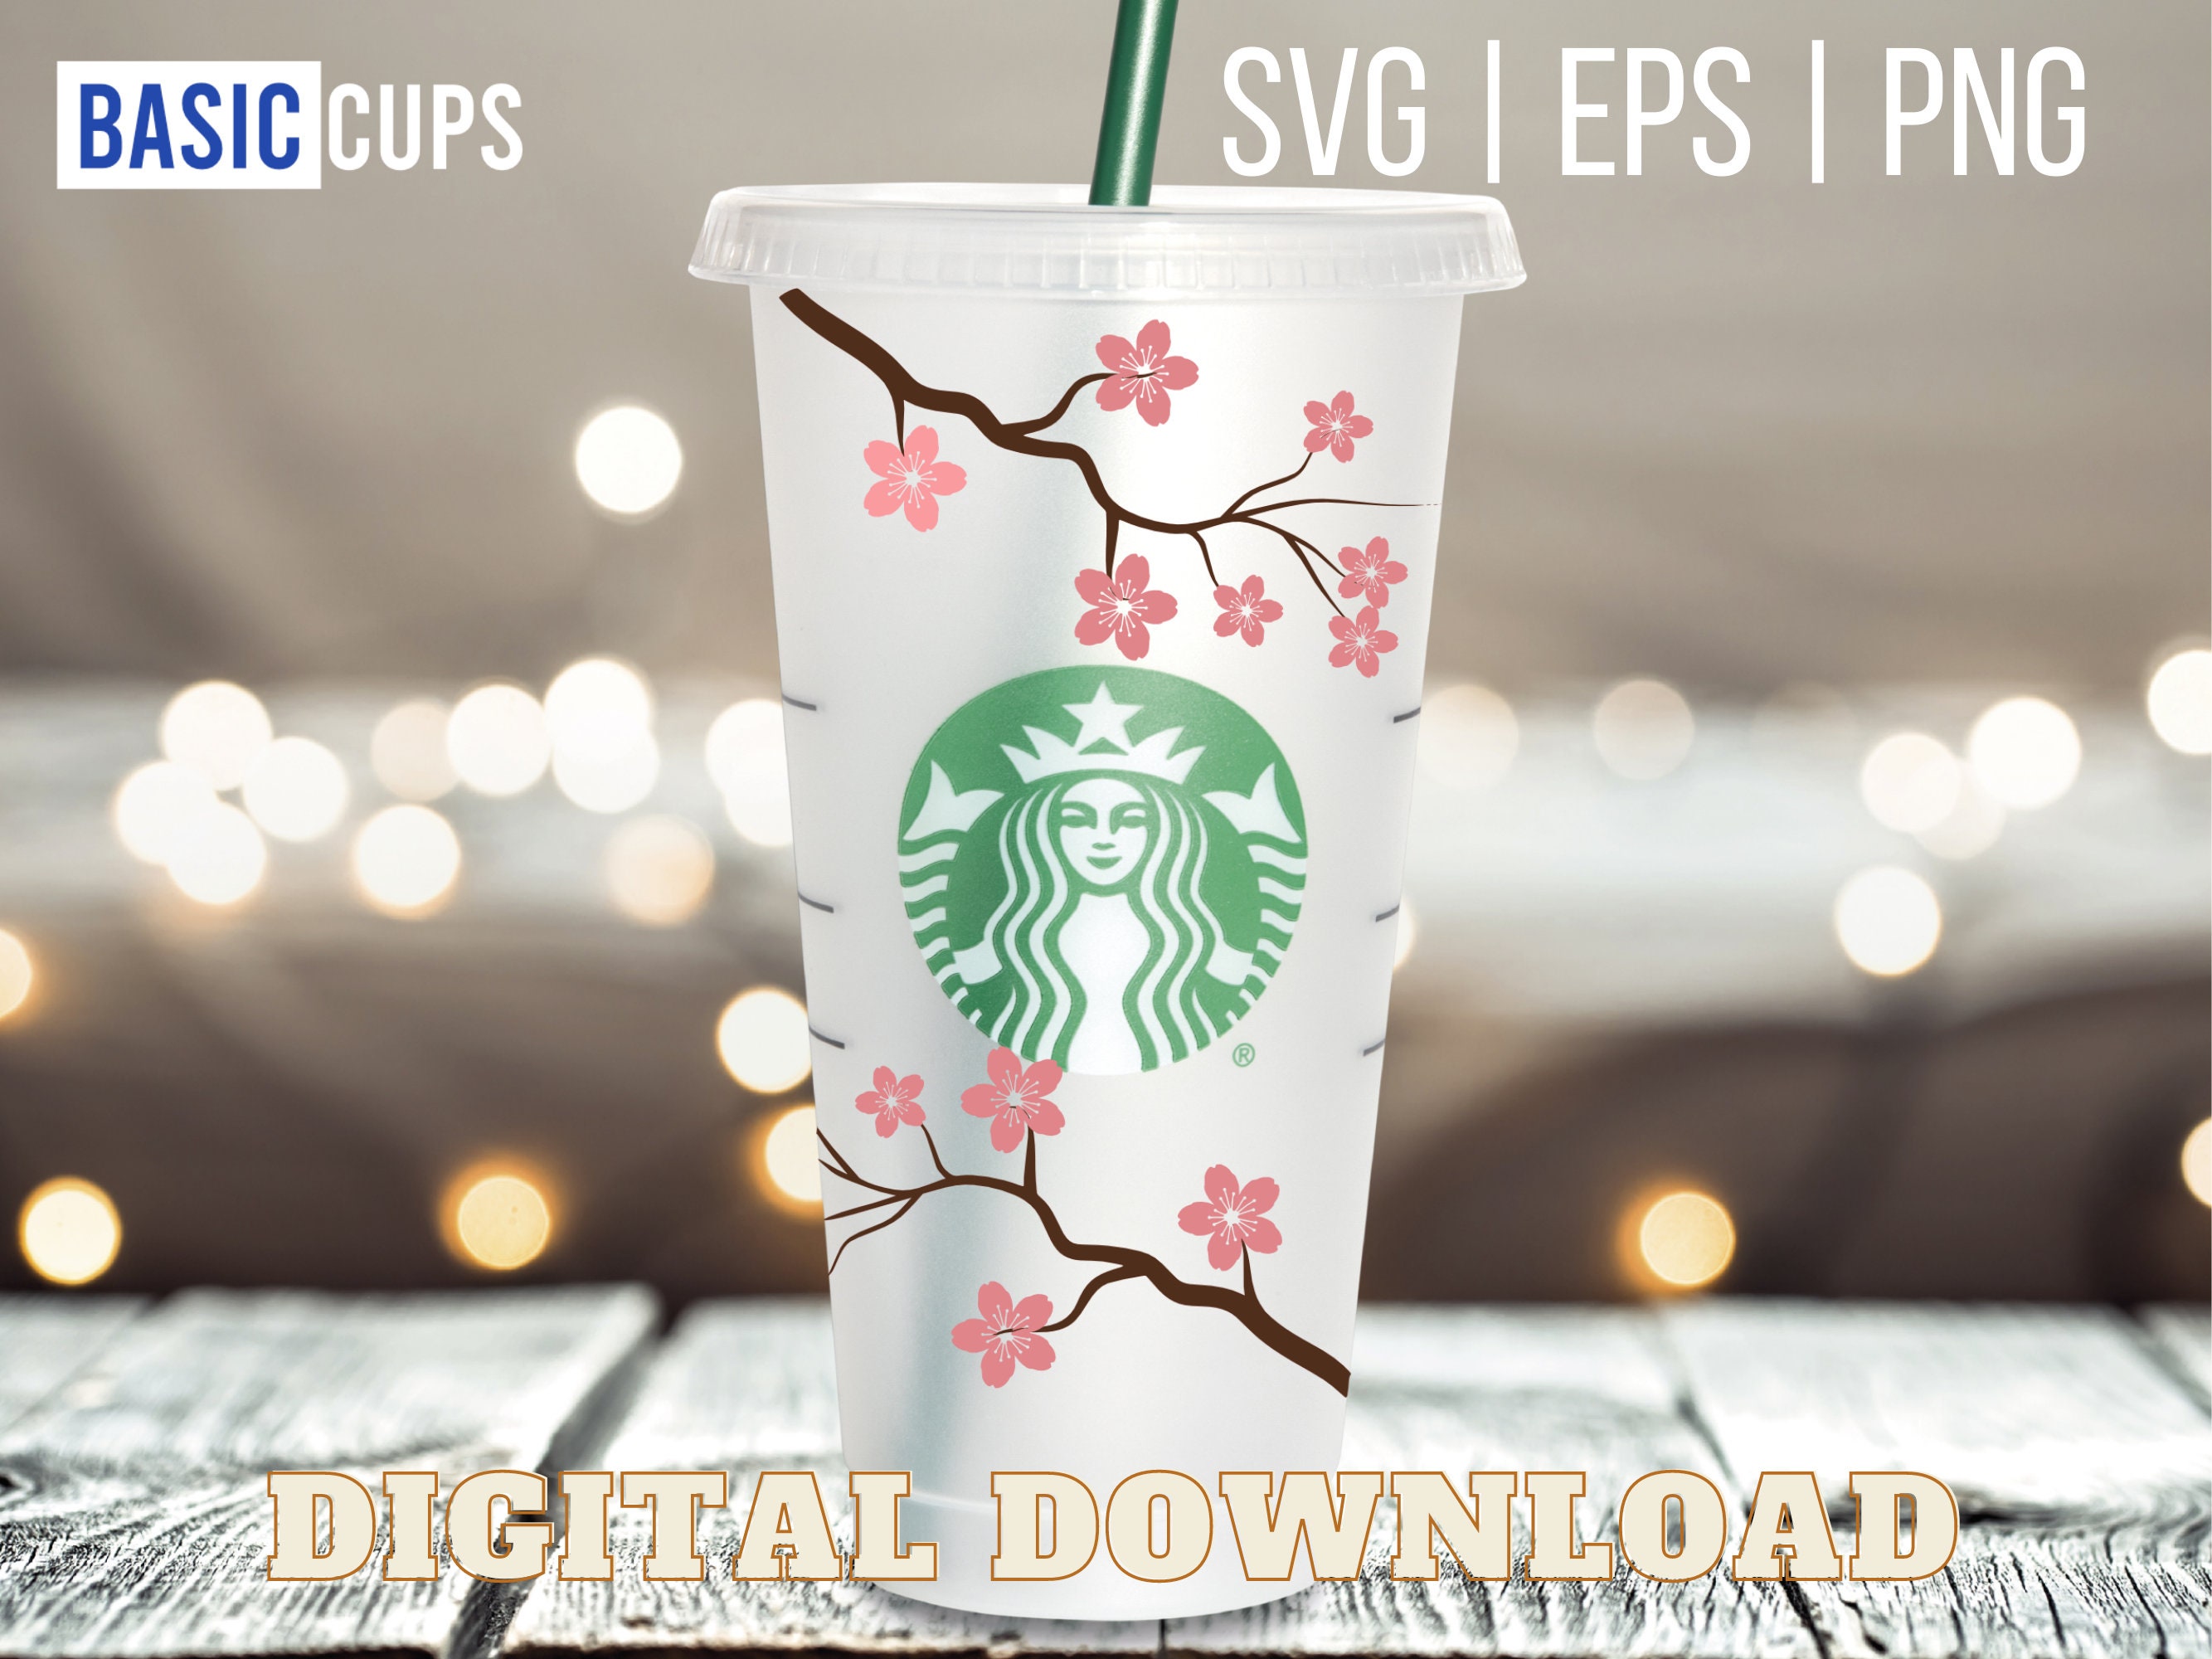 Starbucks Coffee Mug Silicone Cover With Strainer Glass Cup Sakura